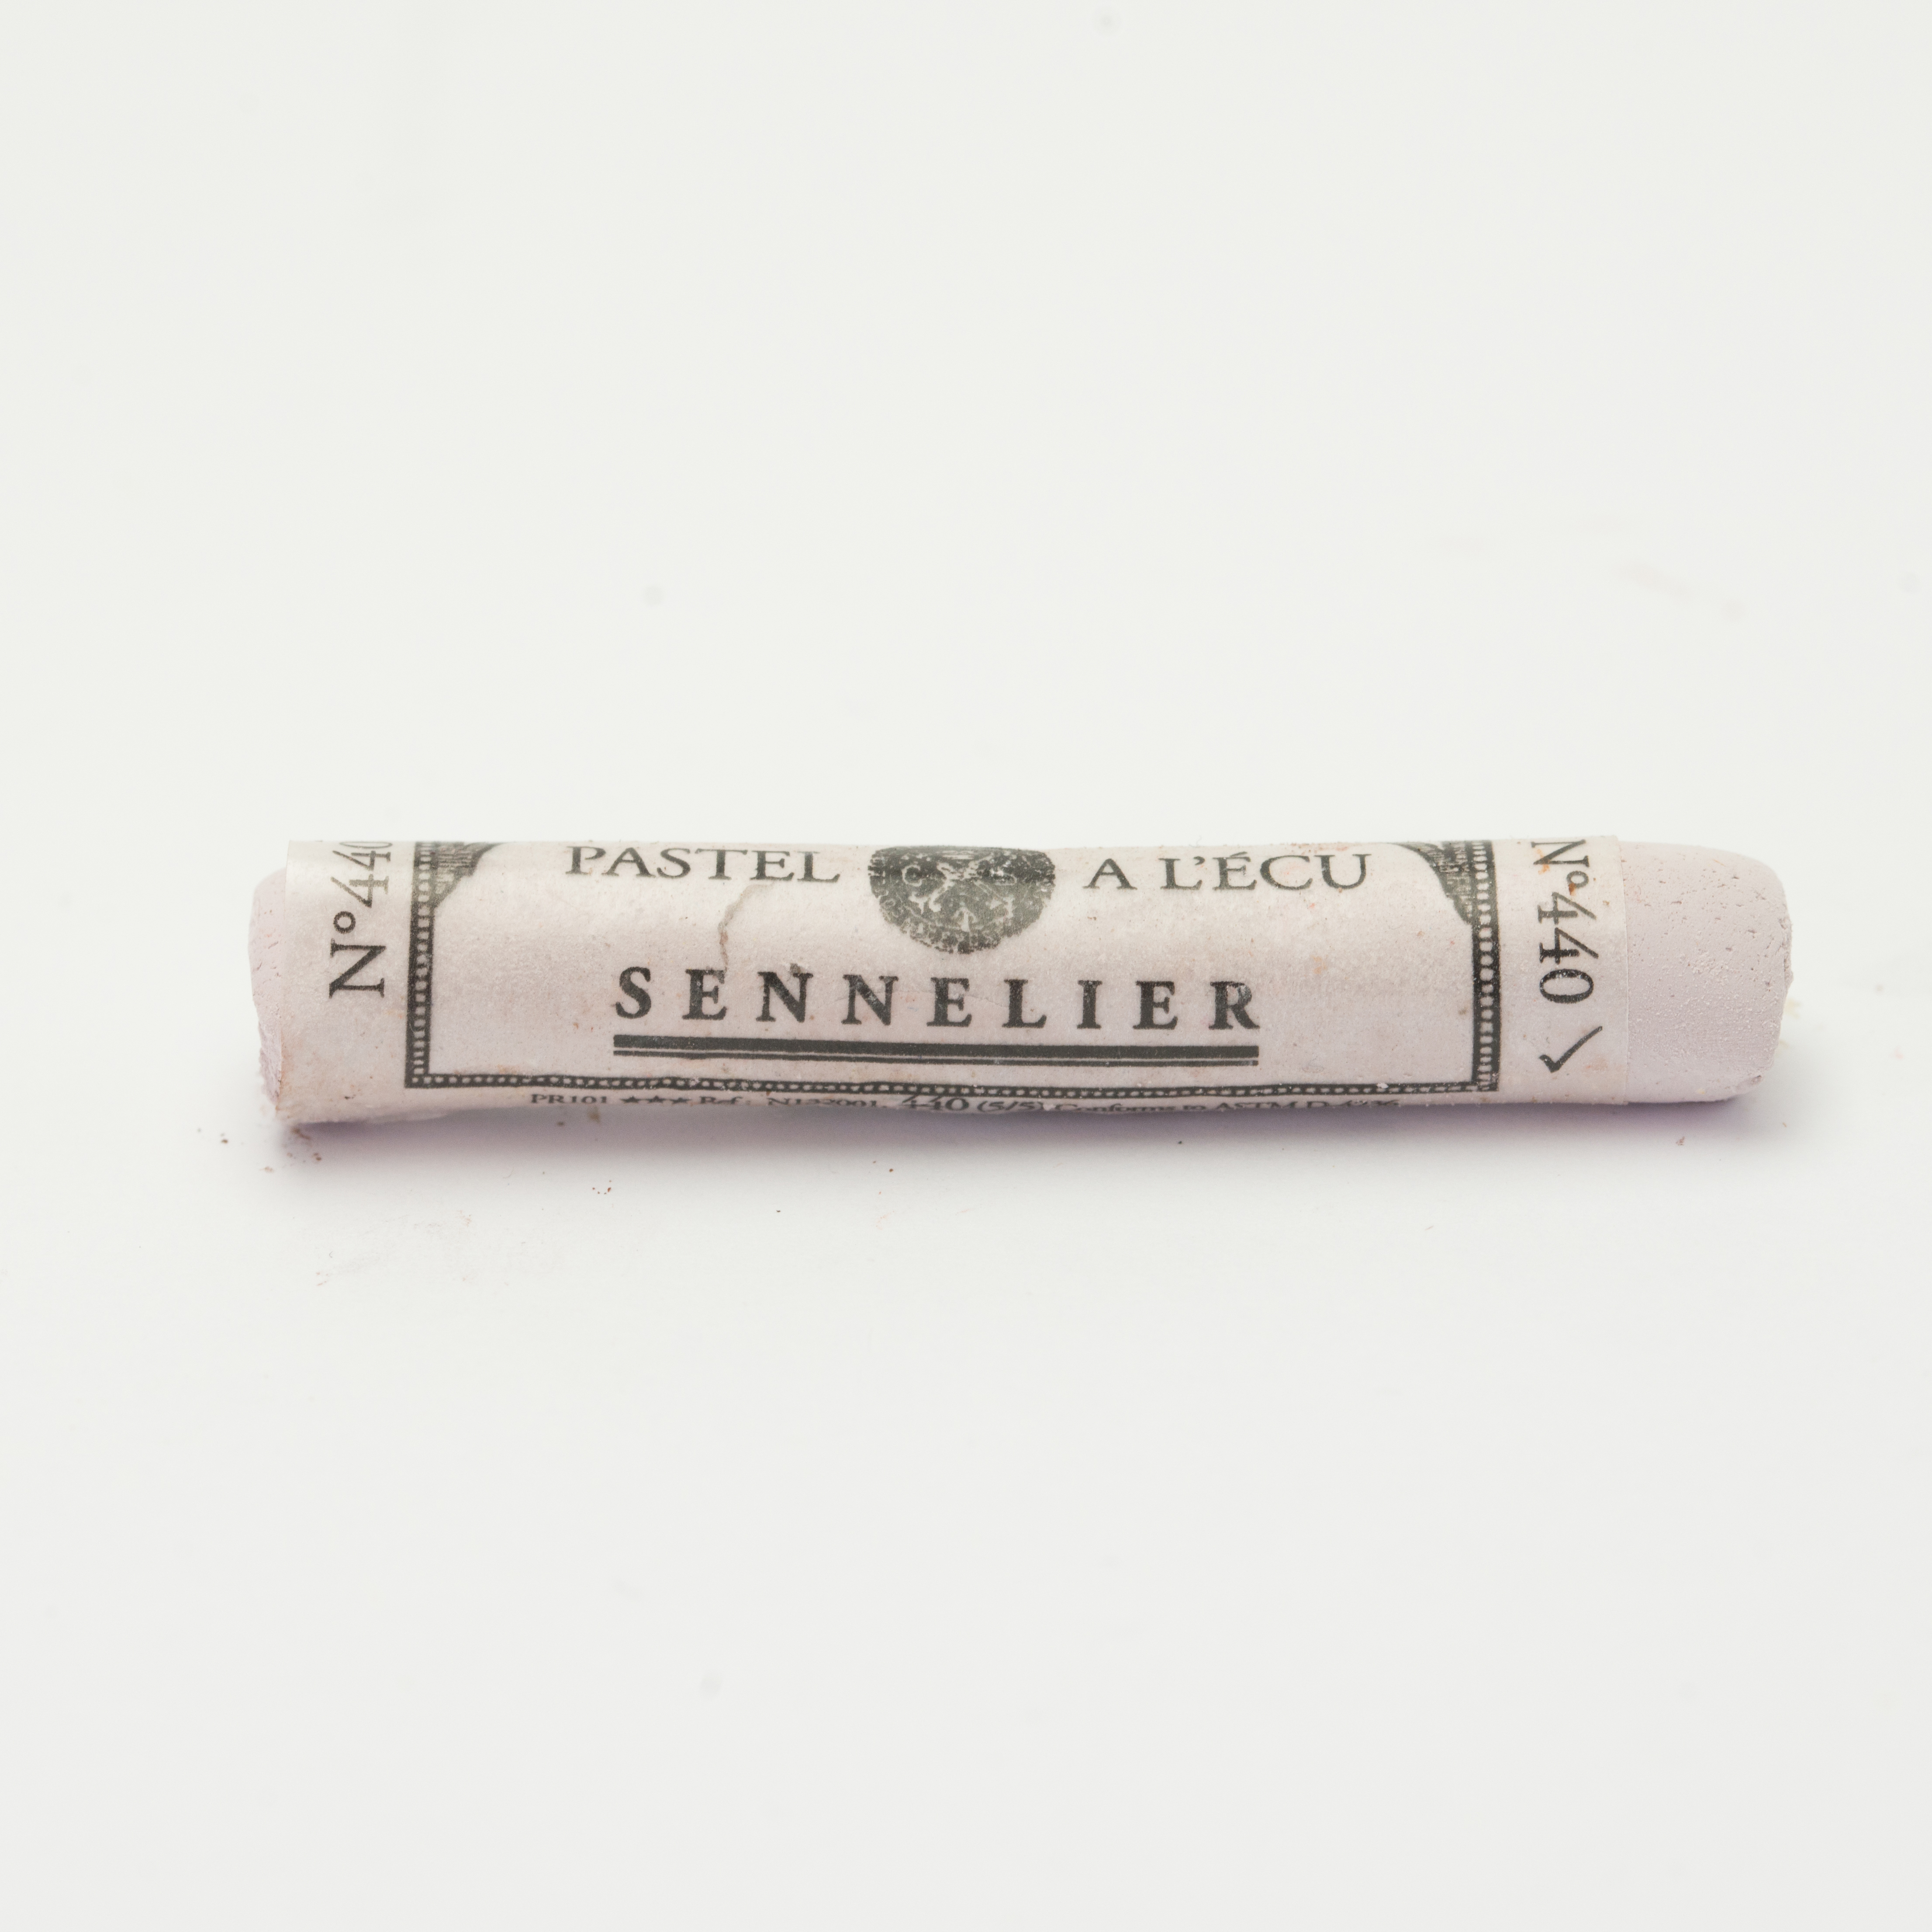 Sennelier Extra Soft Pastels - Van Dick Brown 440